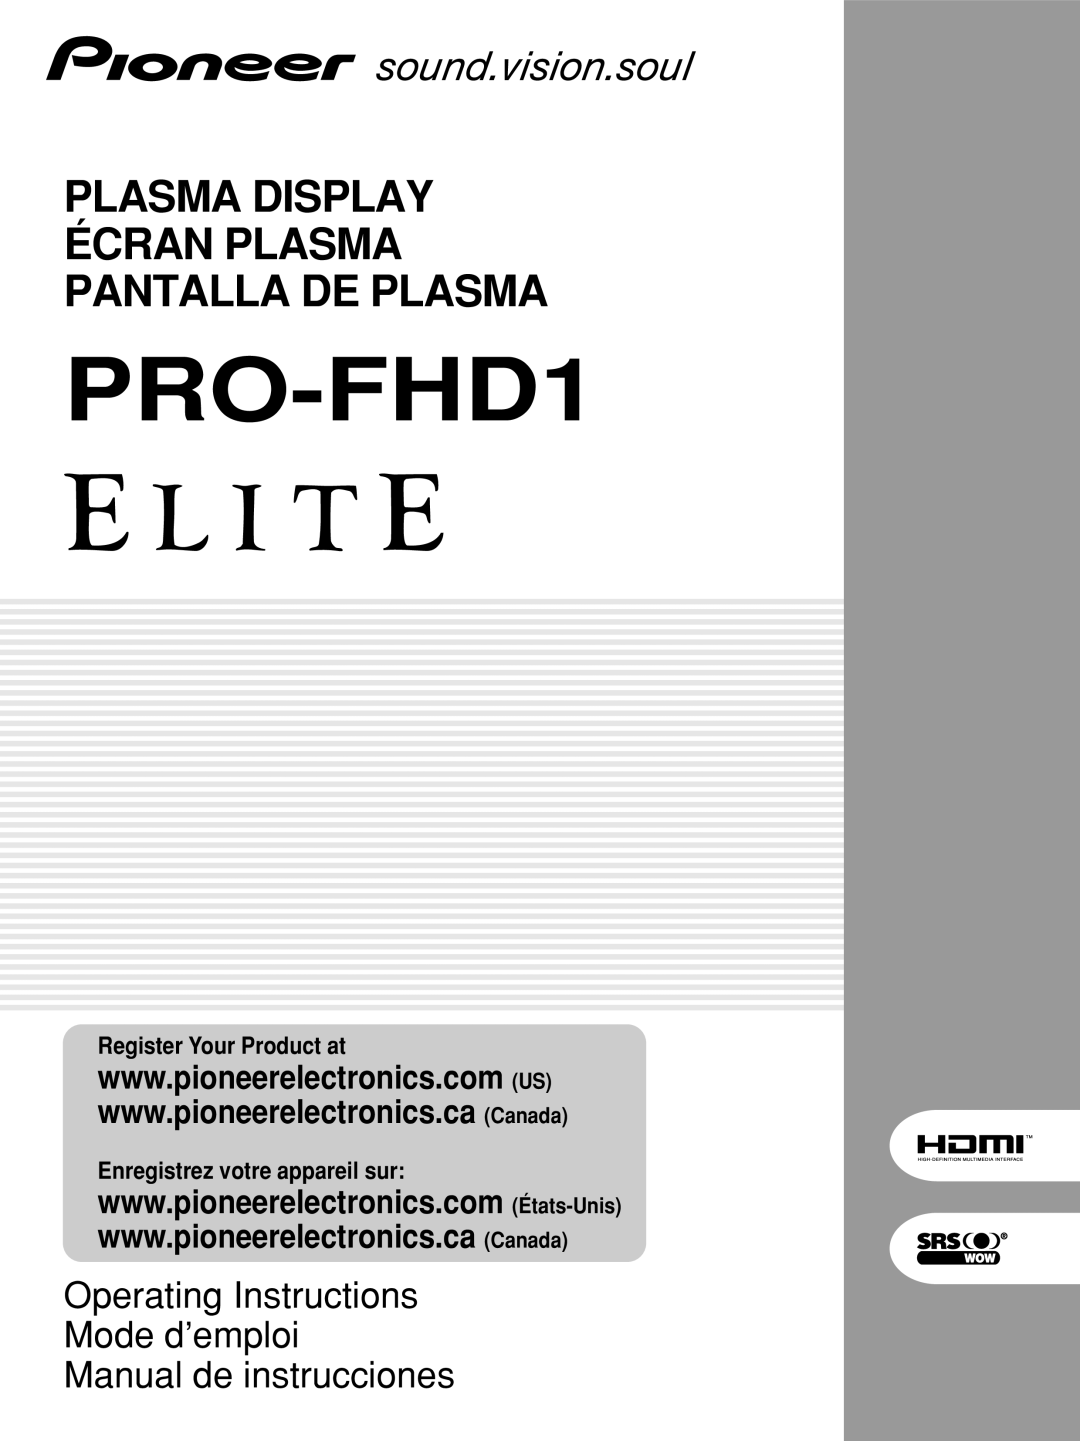 Pioneer PRO-FHD1 operating instructions Plasma Display, Écran Plasma Pantalla De Plasma, Register Your Product at 